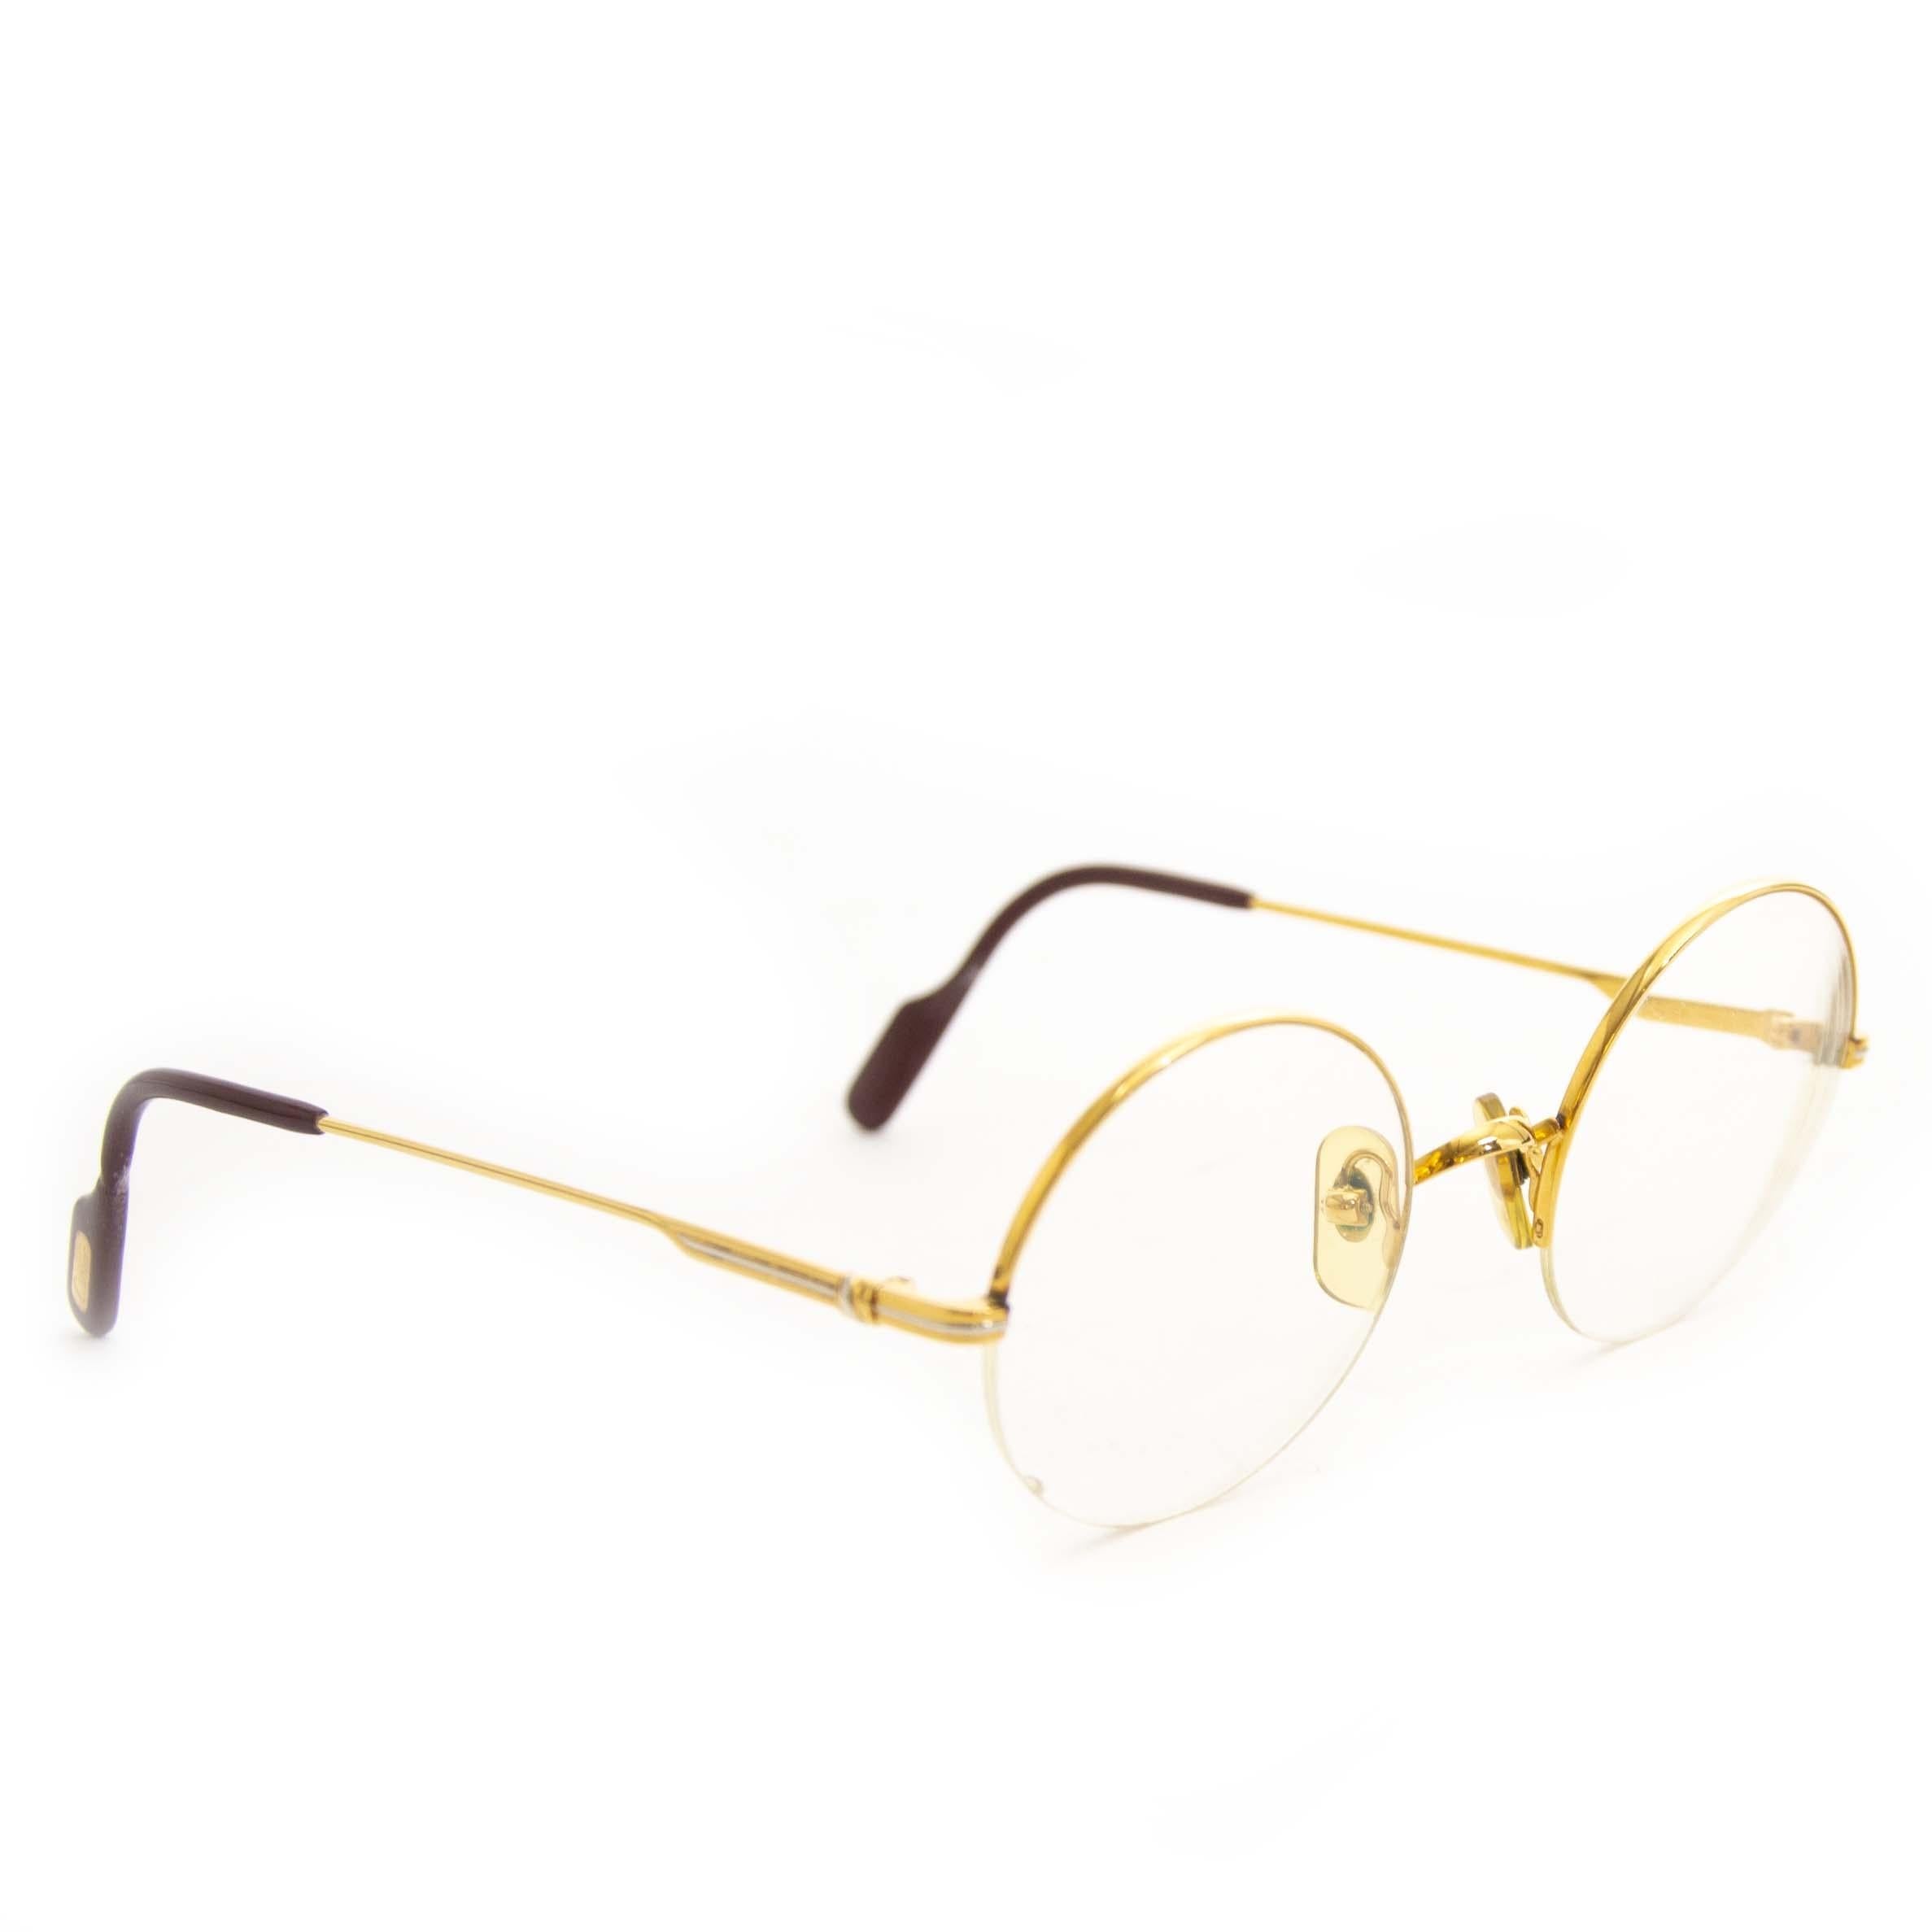 cartier mayfair glasses